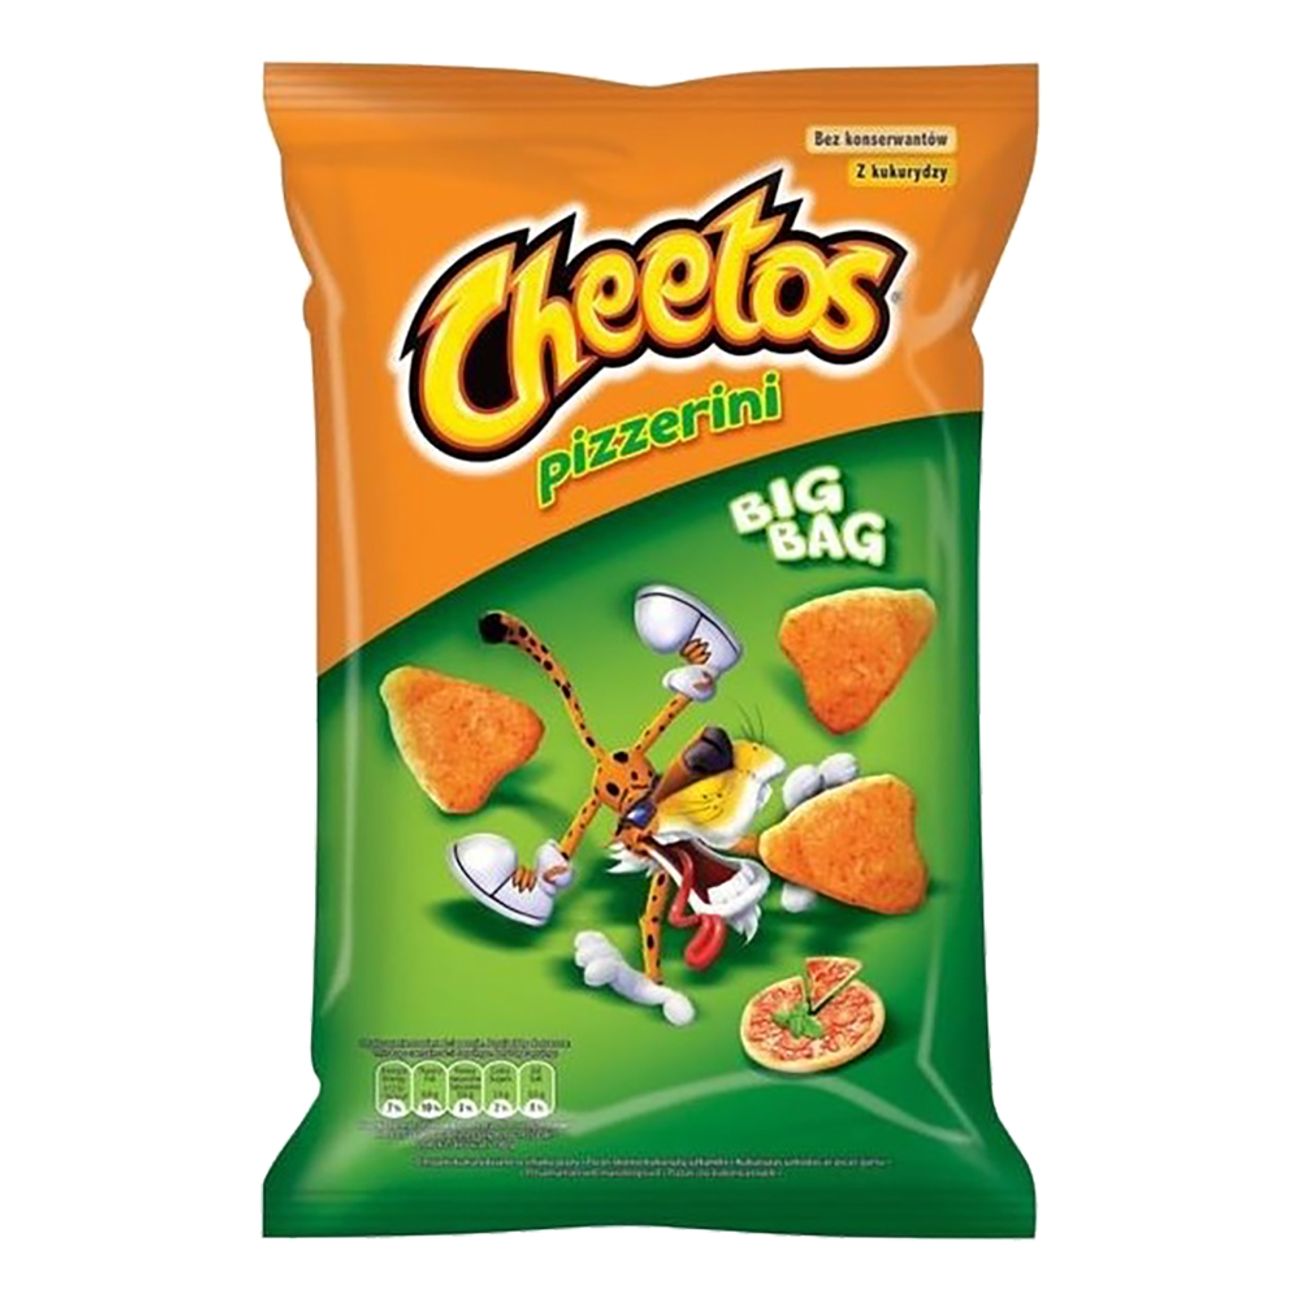 cheetos-pizzerini-78140-2